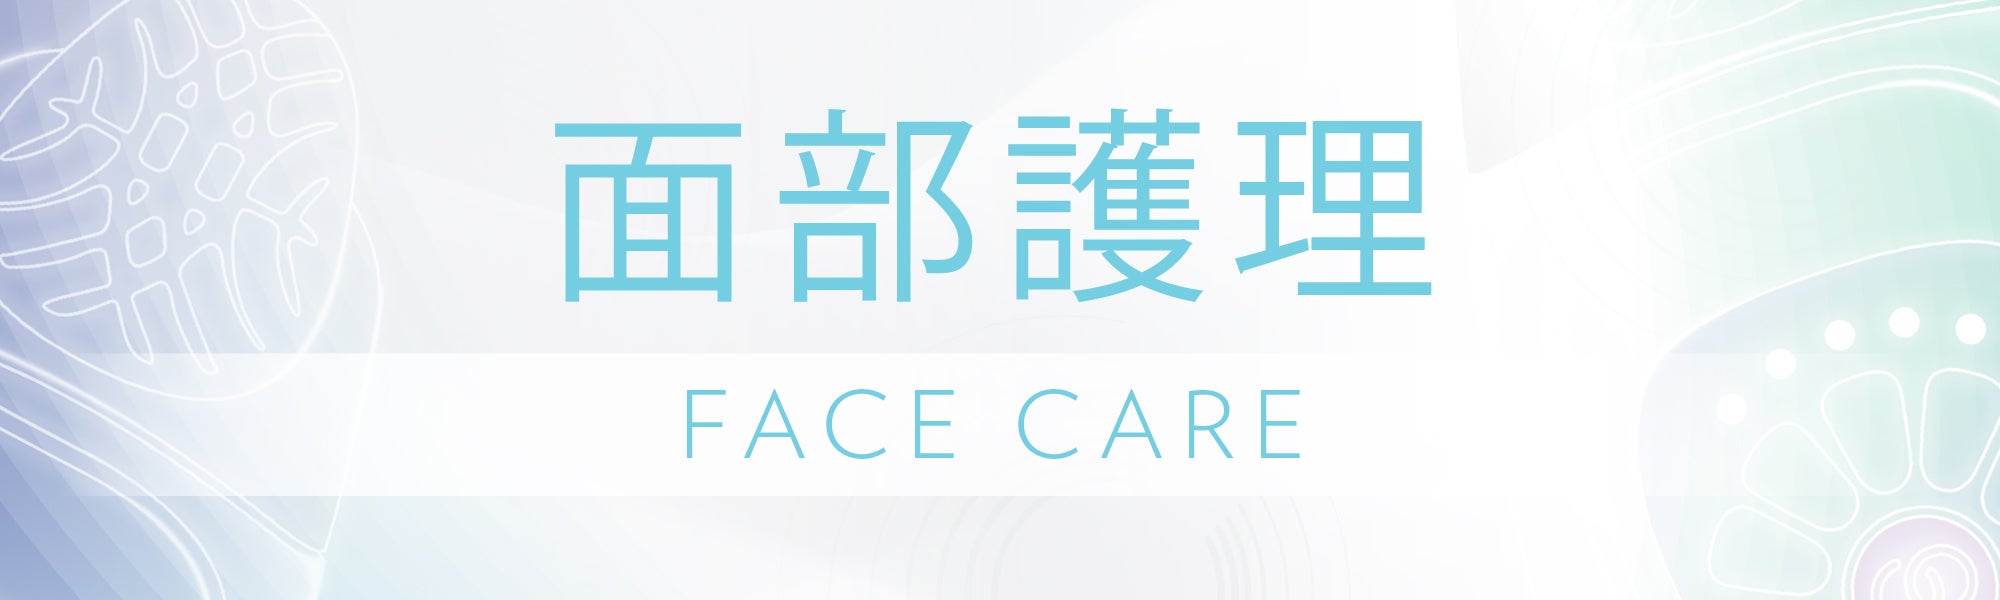 Galvanic Face Spa System III - Face Care